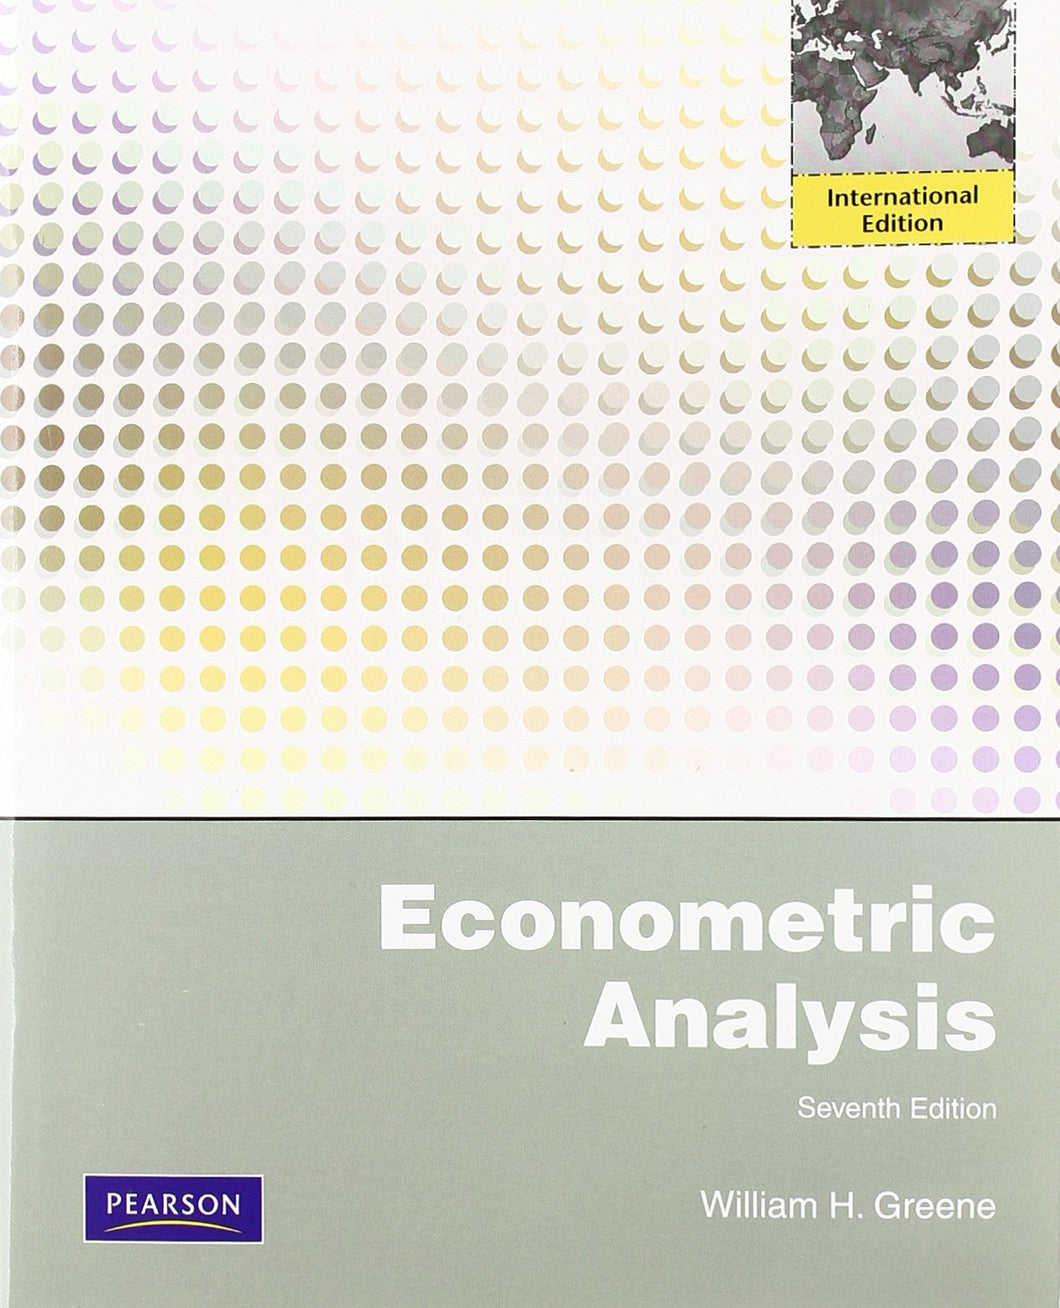 Econometric Analysis [Paperback] 7e by William H. Greene - Smiling Bookstore